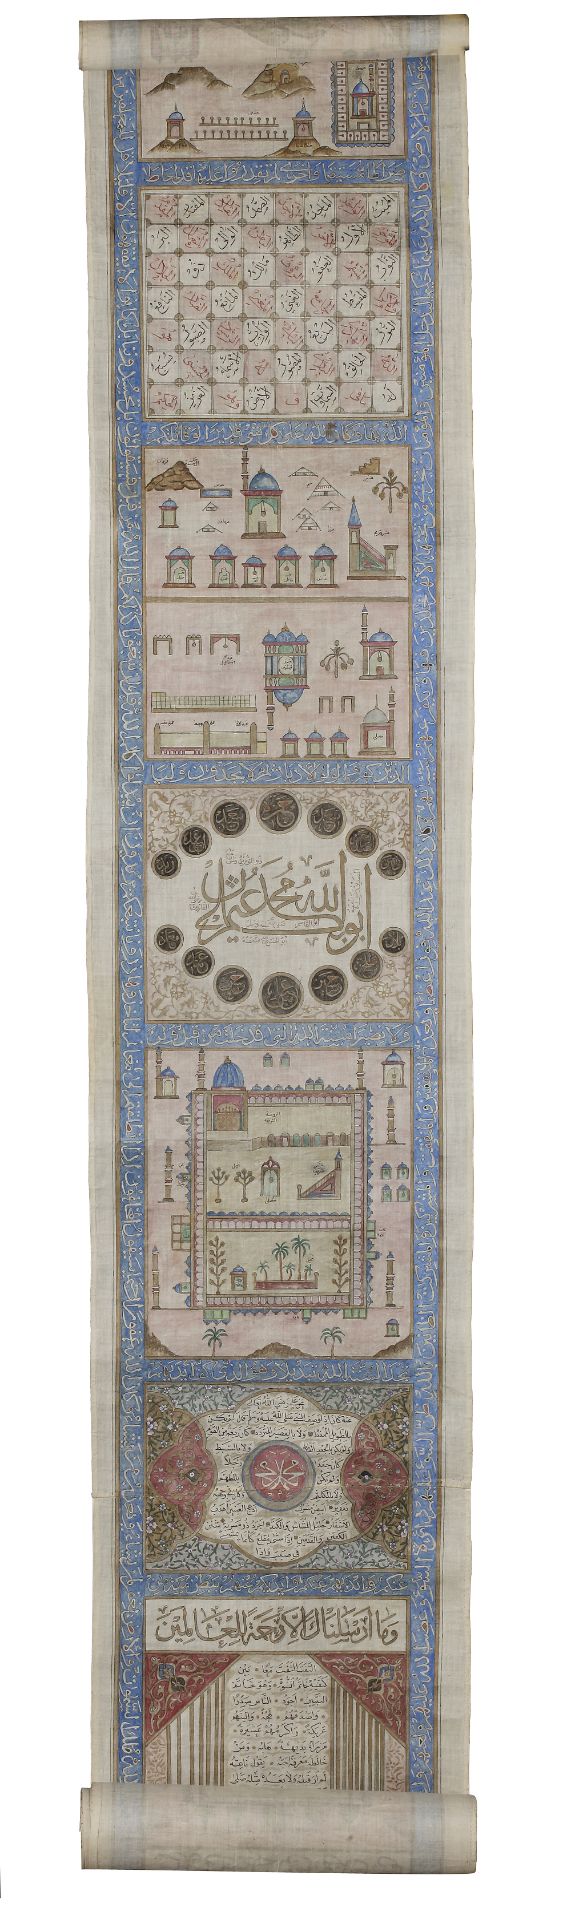 AN OTTOMAN ILLUMINATED HAJJ SCROLL, WRITTEN BY ABDUL-ALAH BIN HUSSAIN IN 1287 AH/1873 AD - Image 5 of 12